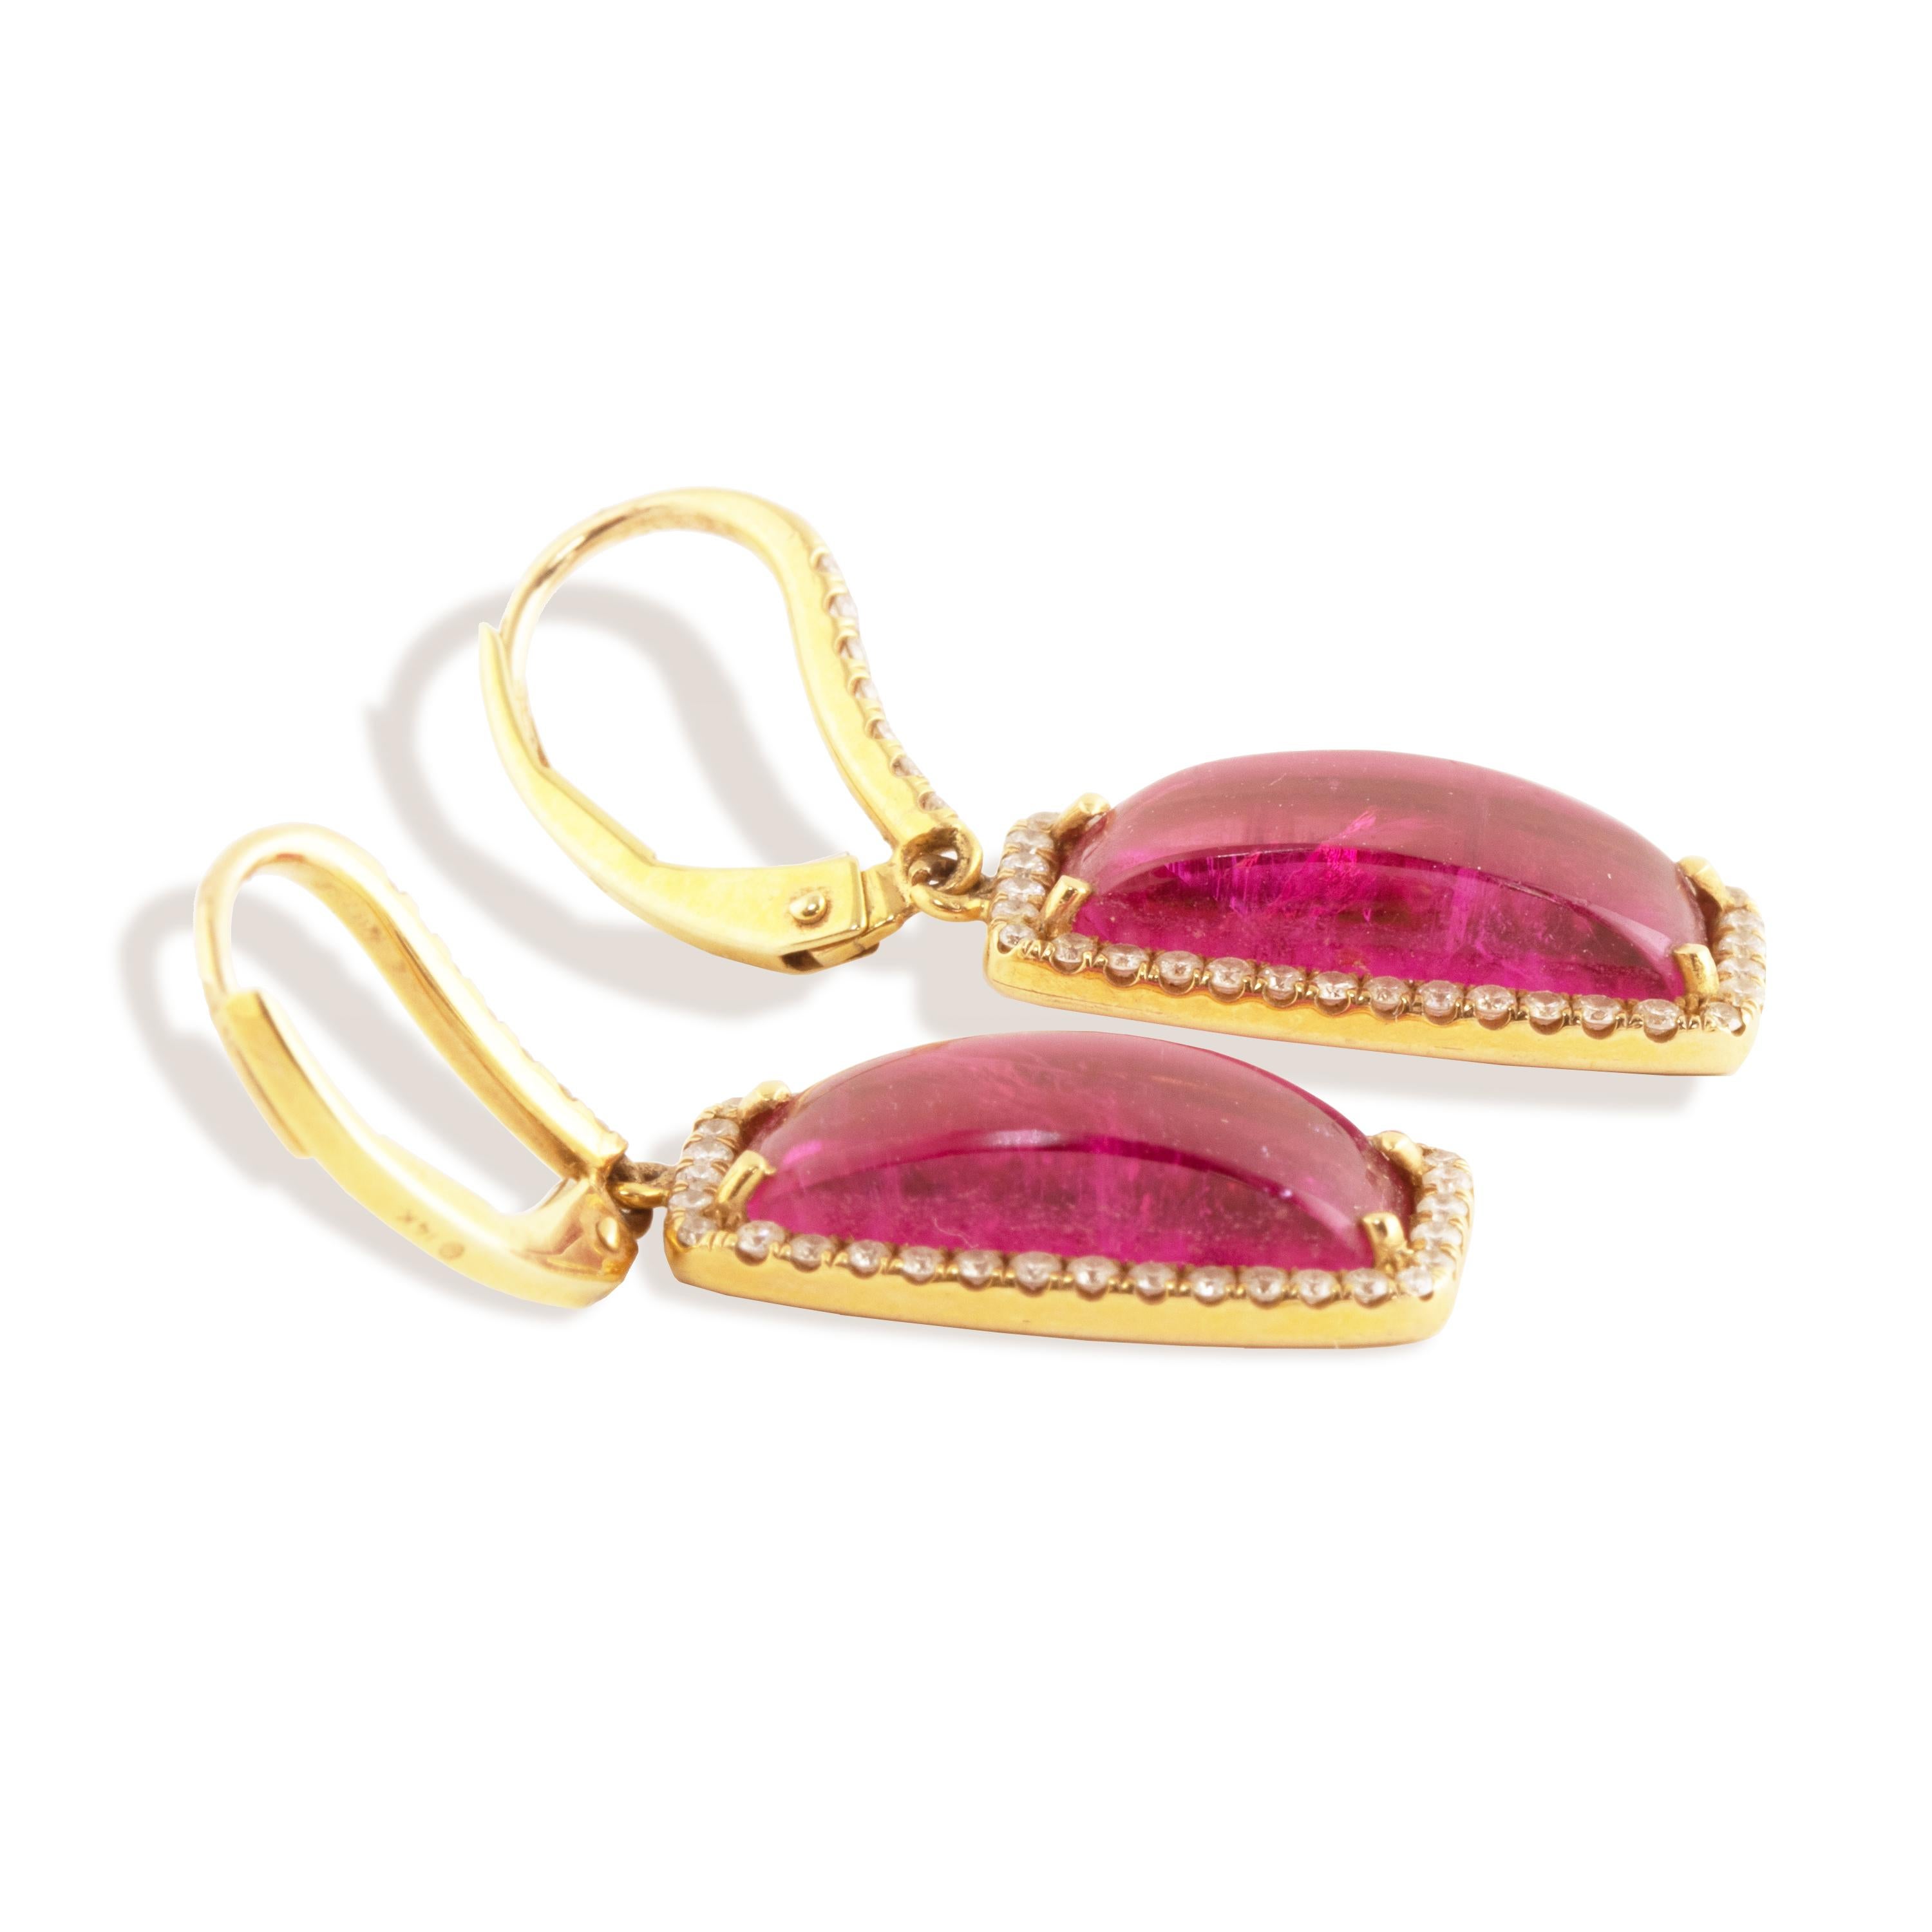 Artisan Ico & the Bird Fine Jewelry 9.5 carat Rubellite Tourmaline Diamond Gold Earrings For Sale